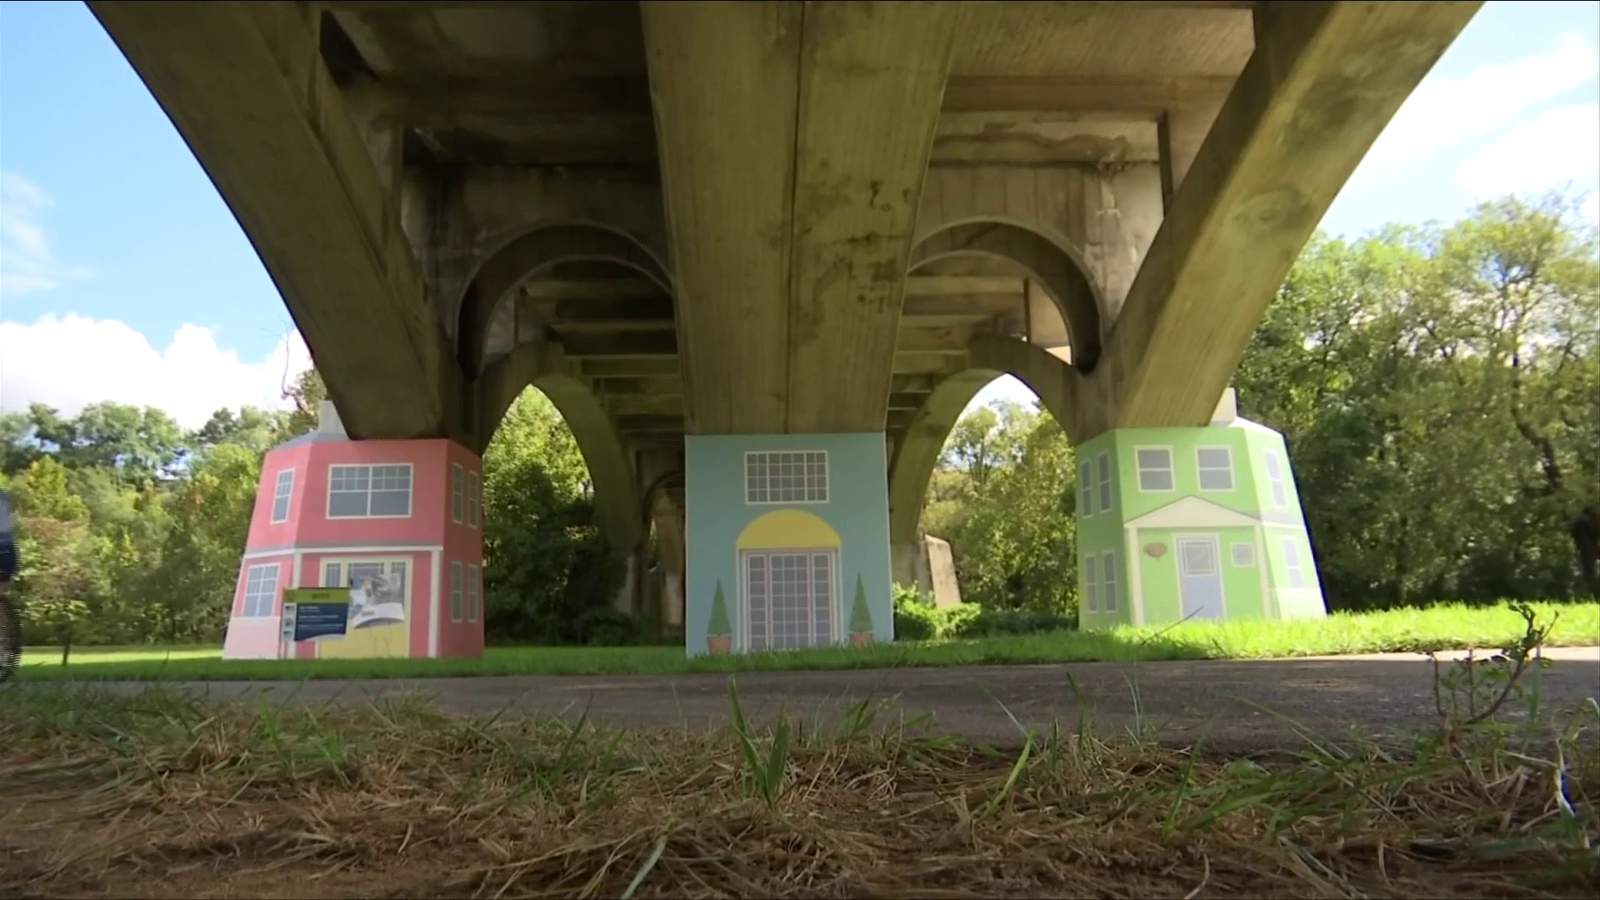 Roanoke River Greenway under Memorial Bridge revitalized with artwork